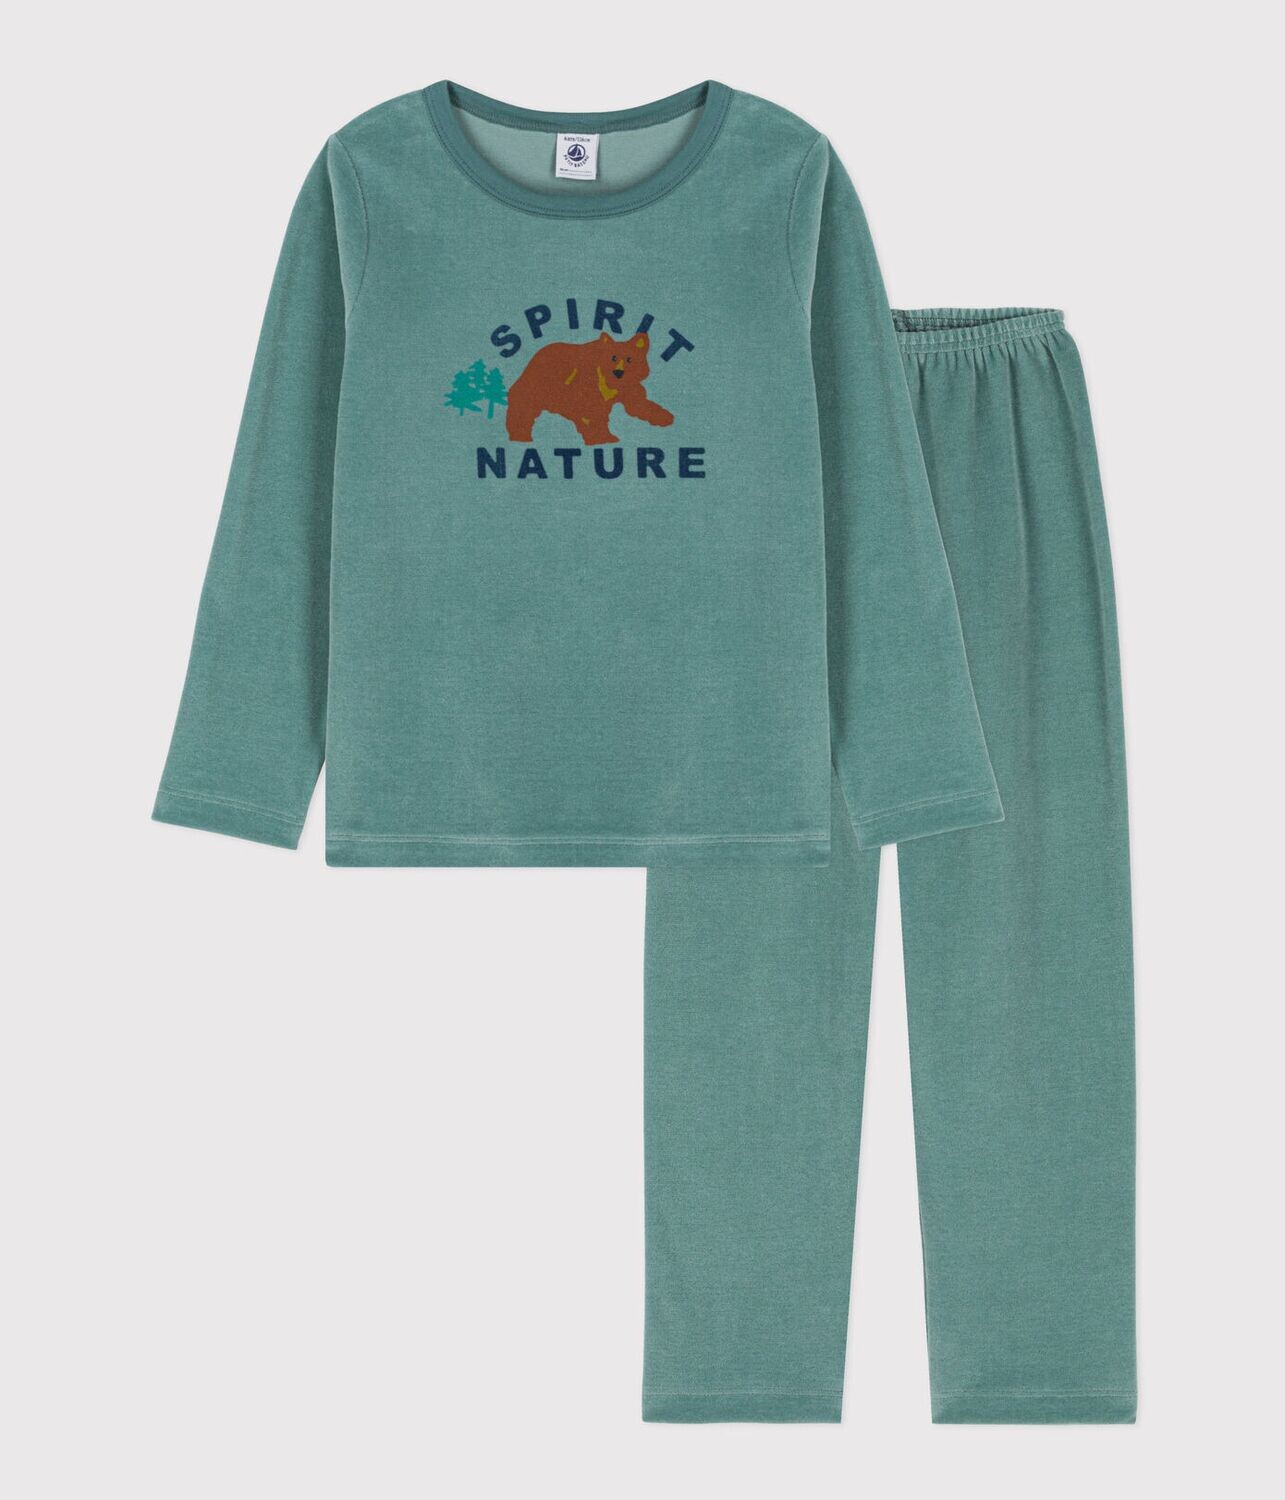 Pyjama petite fille/petit garçon en velours imprimé ours, Spirit Nature Petit Bateau